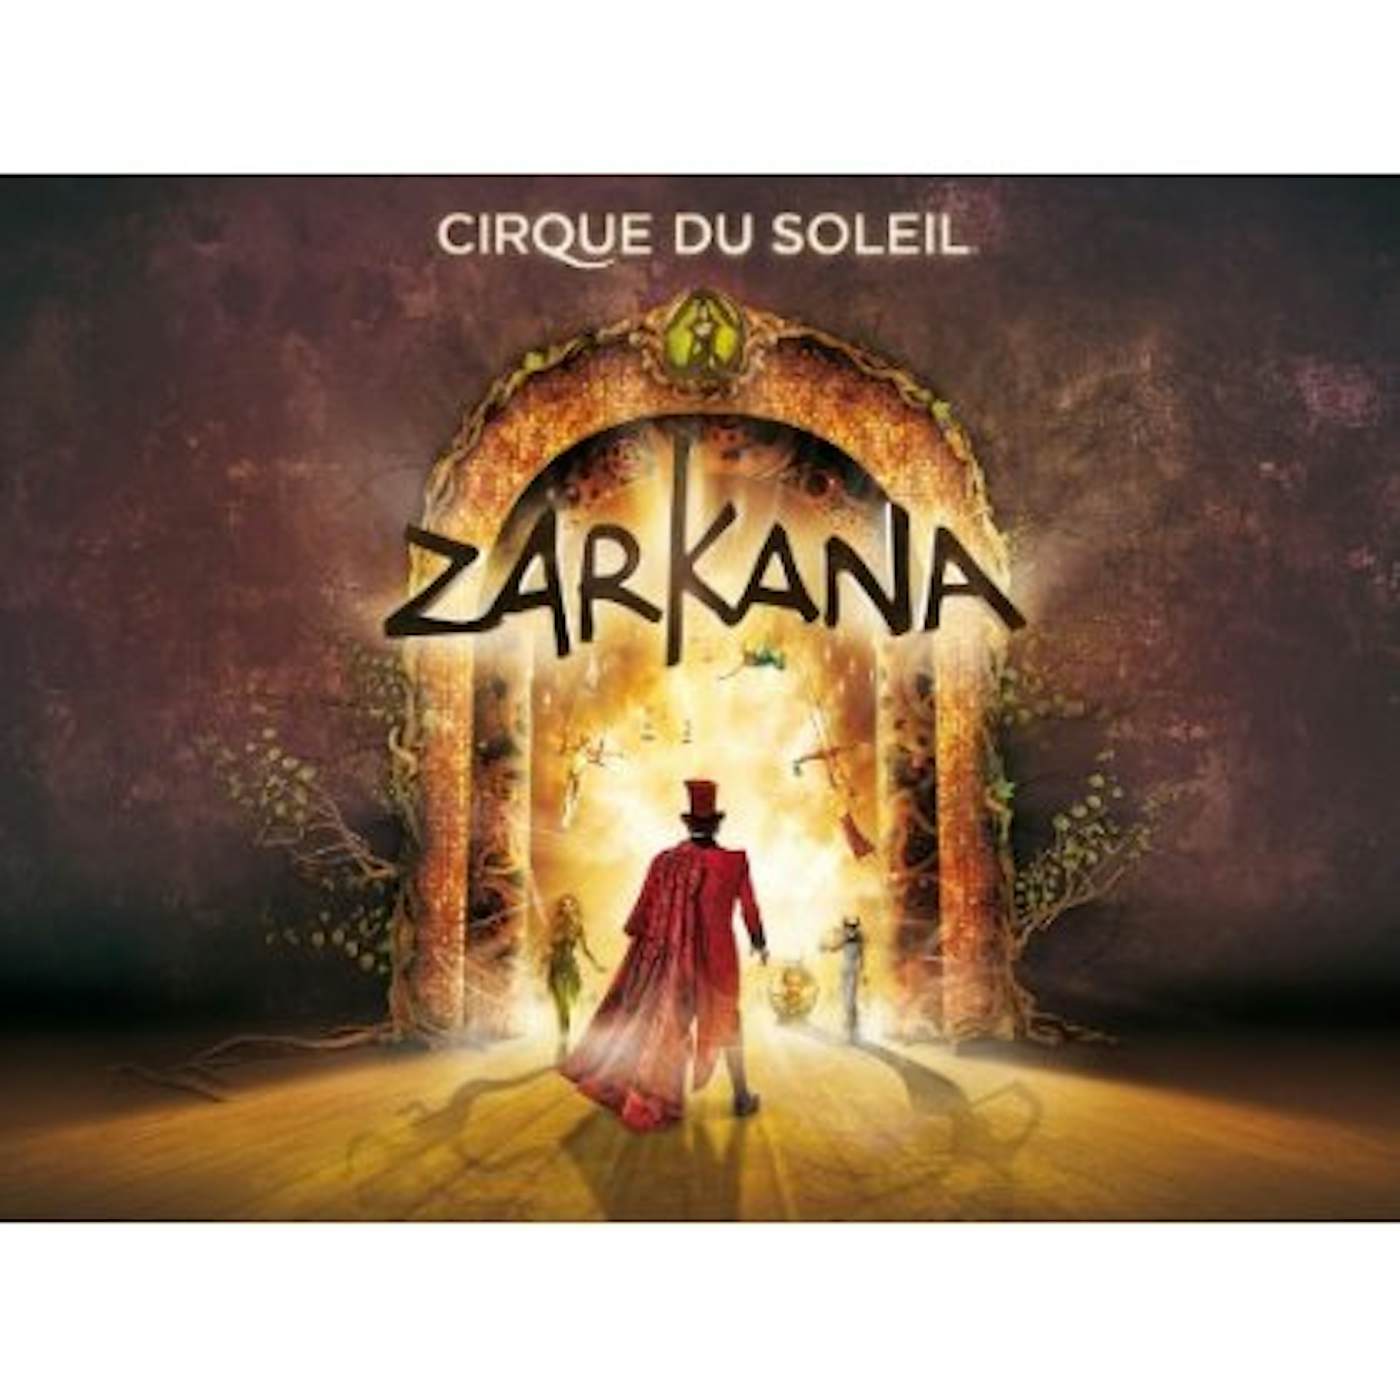 Cirque du Soleil ZARKANA / Original Soundtrack CD